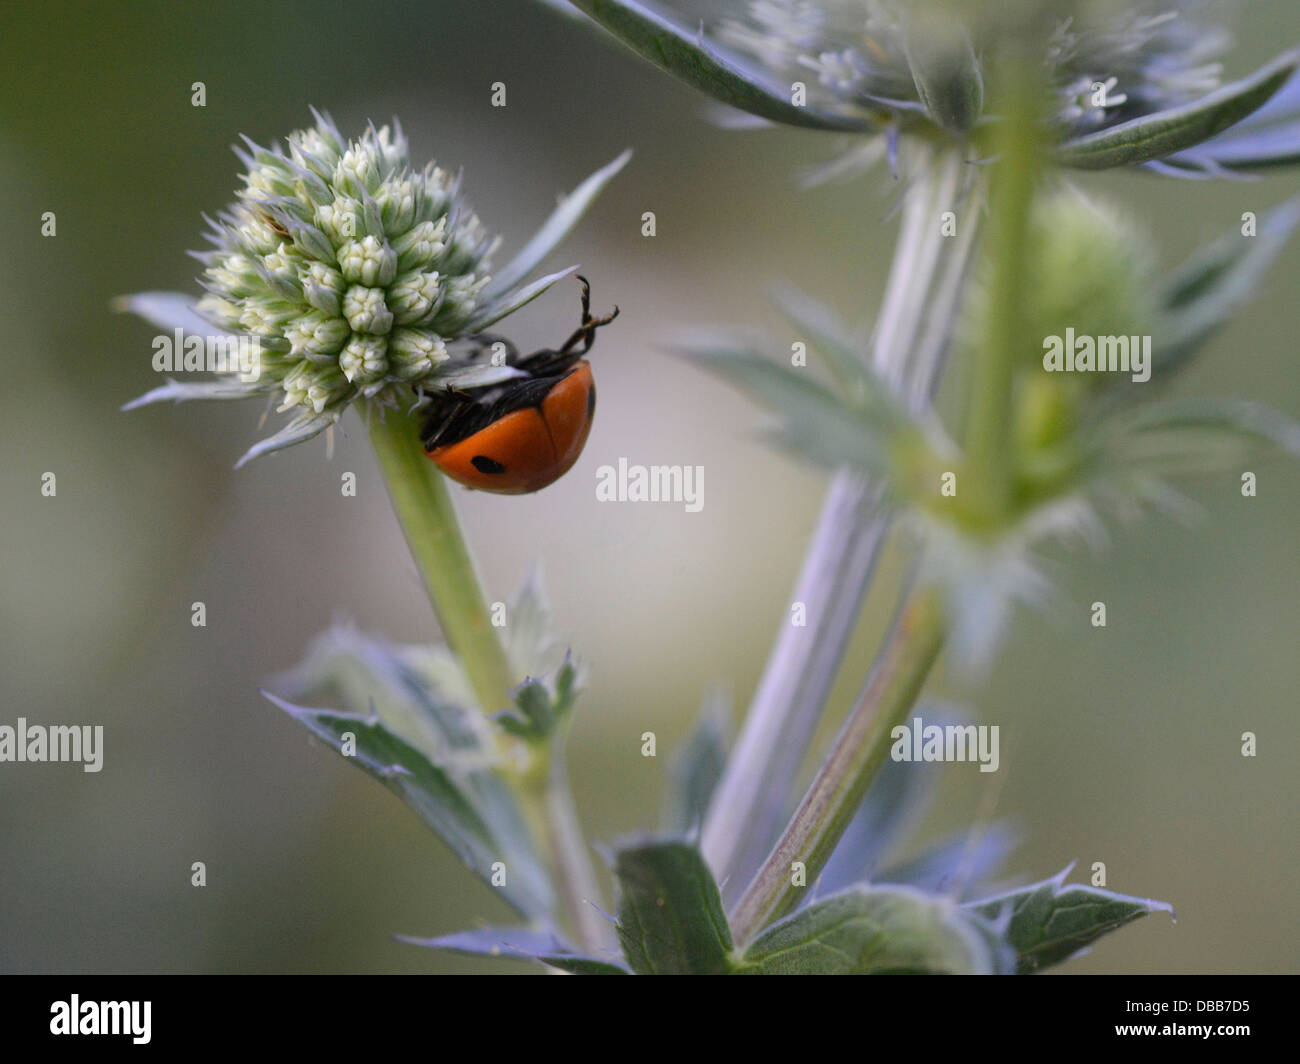 A ladybird balancing on an eryngium flowerhead. Stock Photo